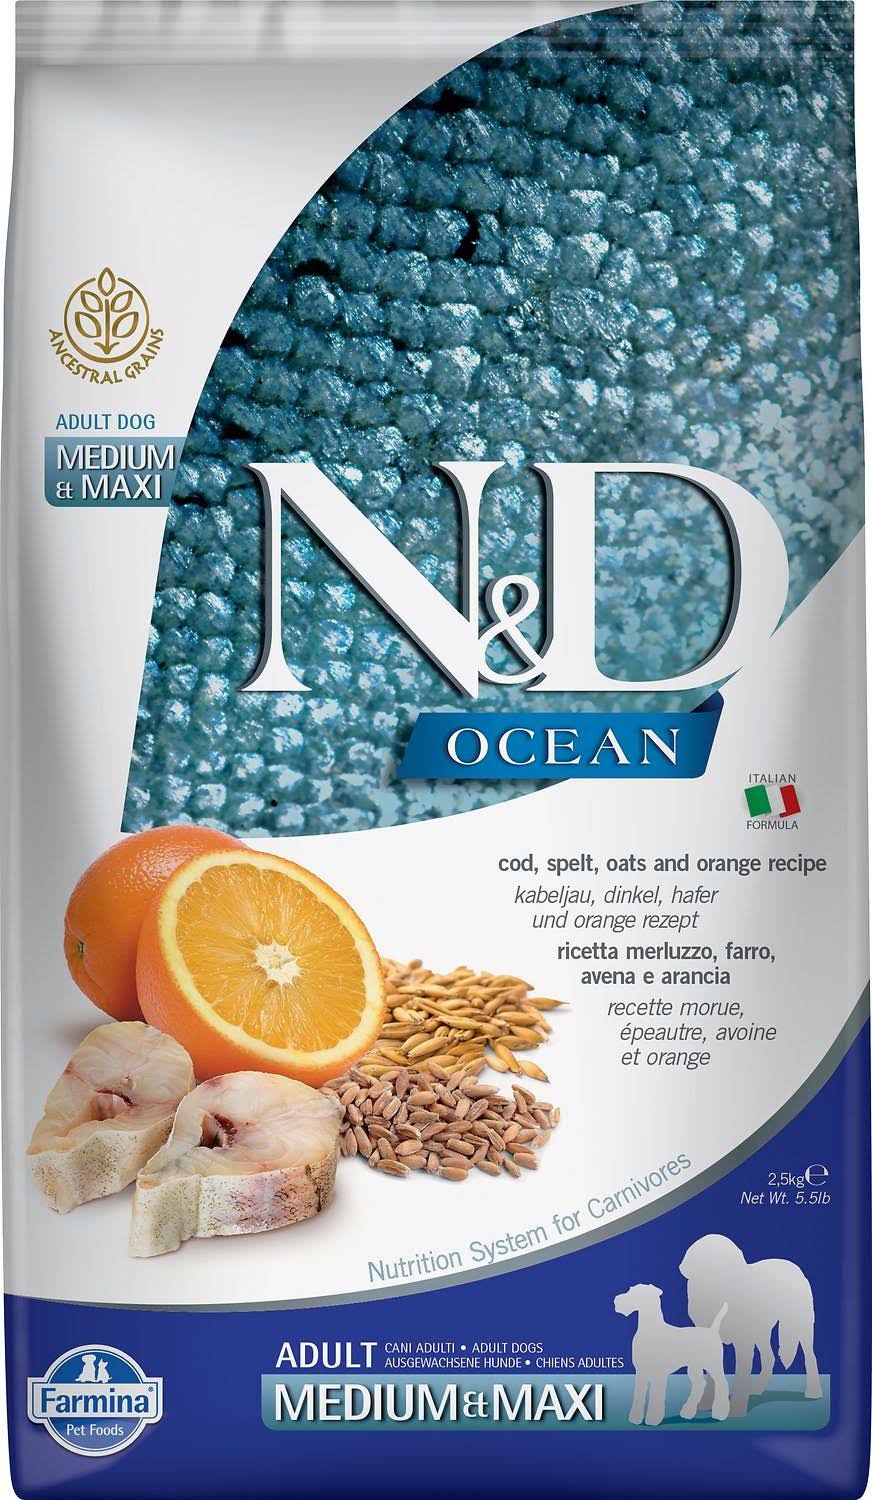 NandD Ocean Cod, Spelt, Oats and Orange Medium and Maxi Adult Dog Food - 2.5kg - Farmina